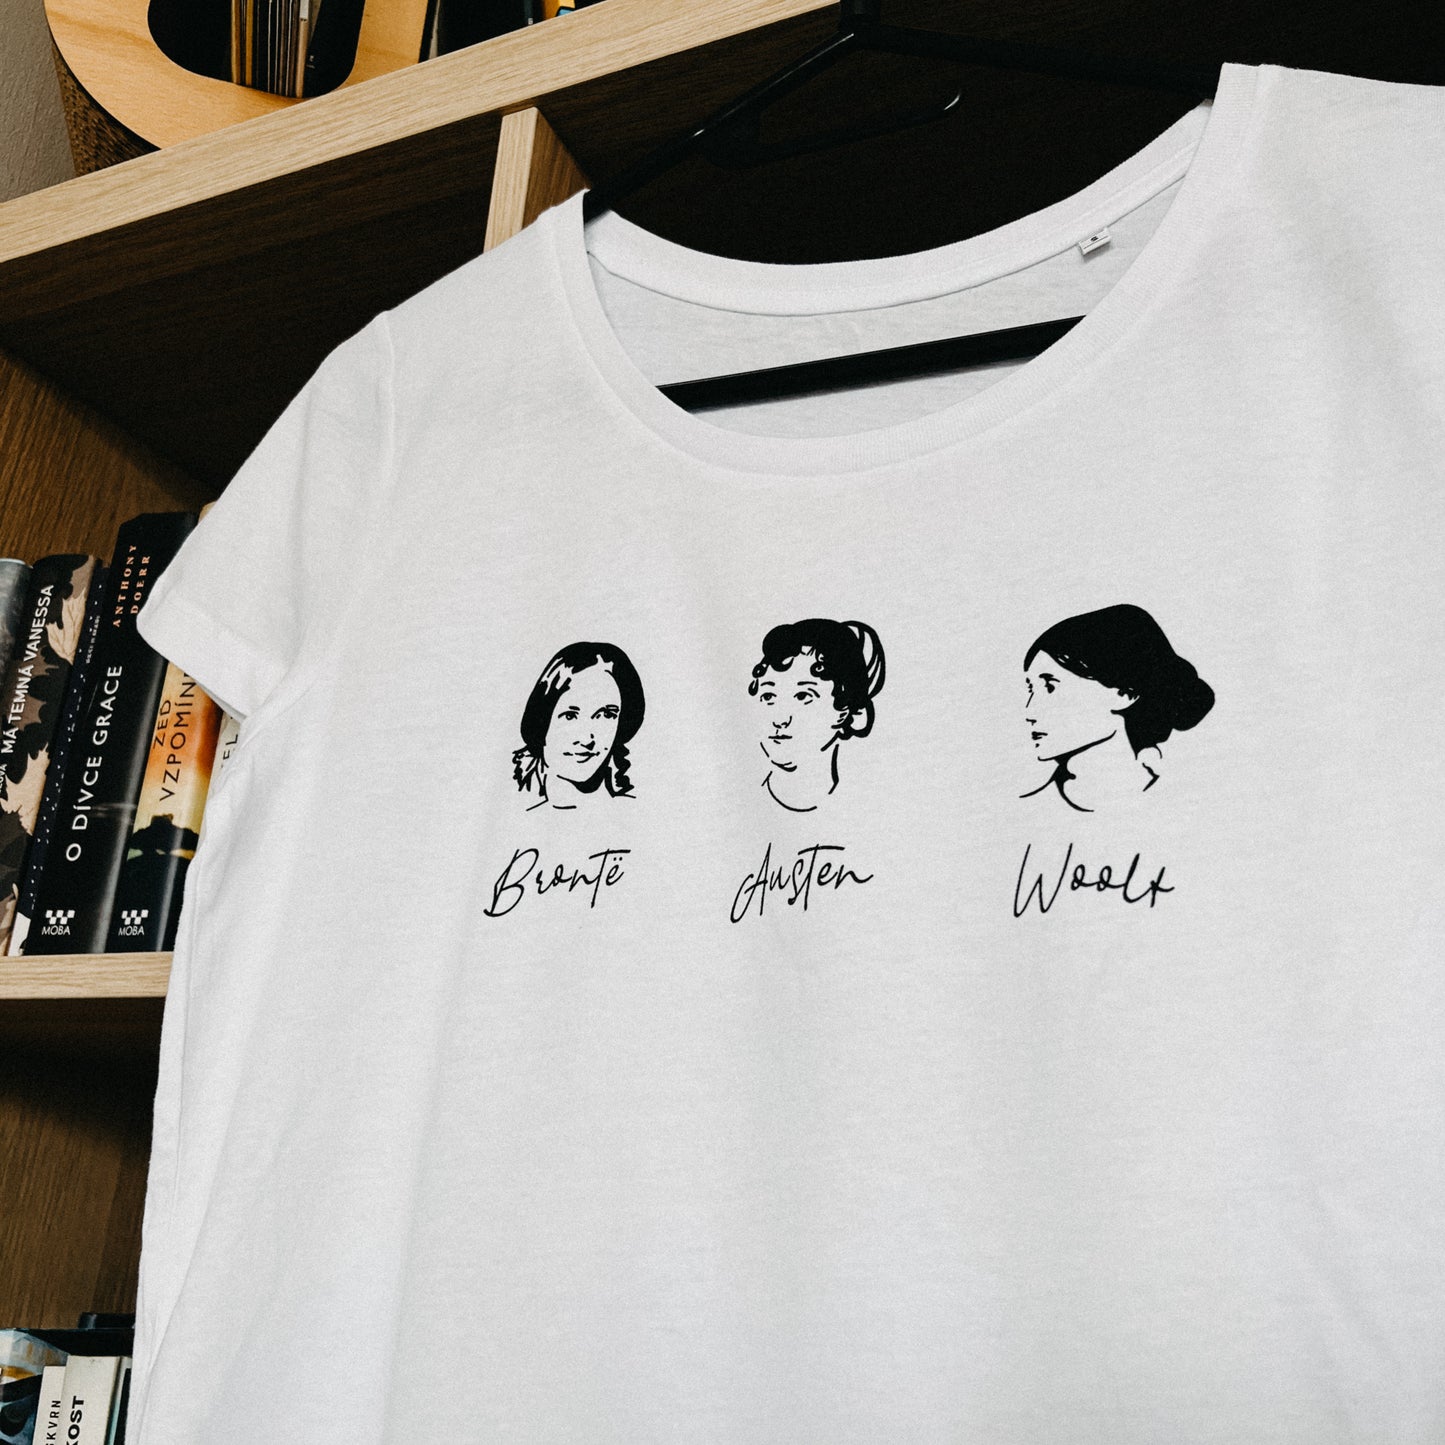 Tričko: Brontë, Austen, Woolf